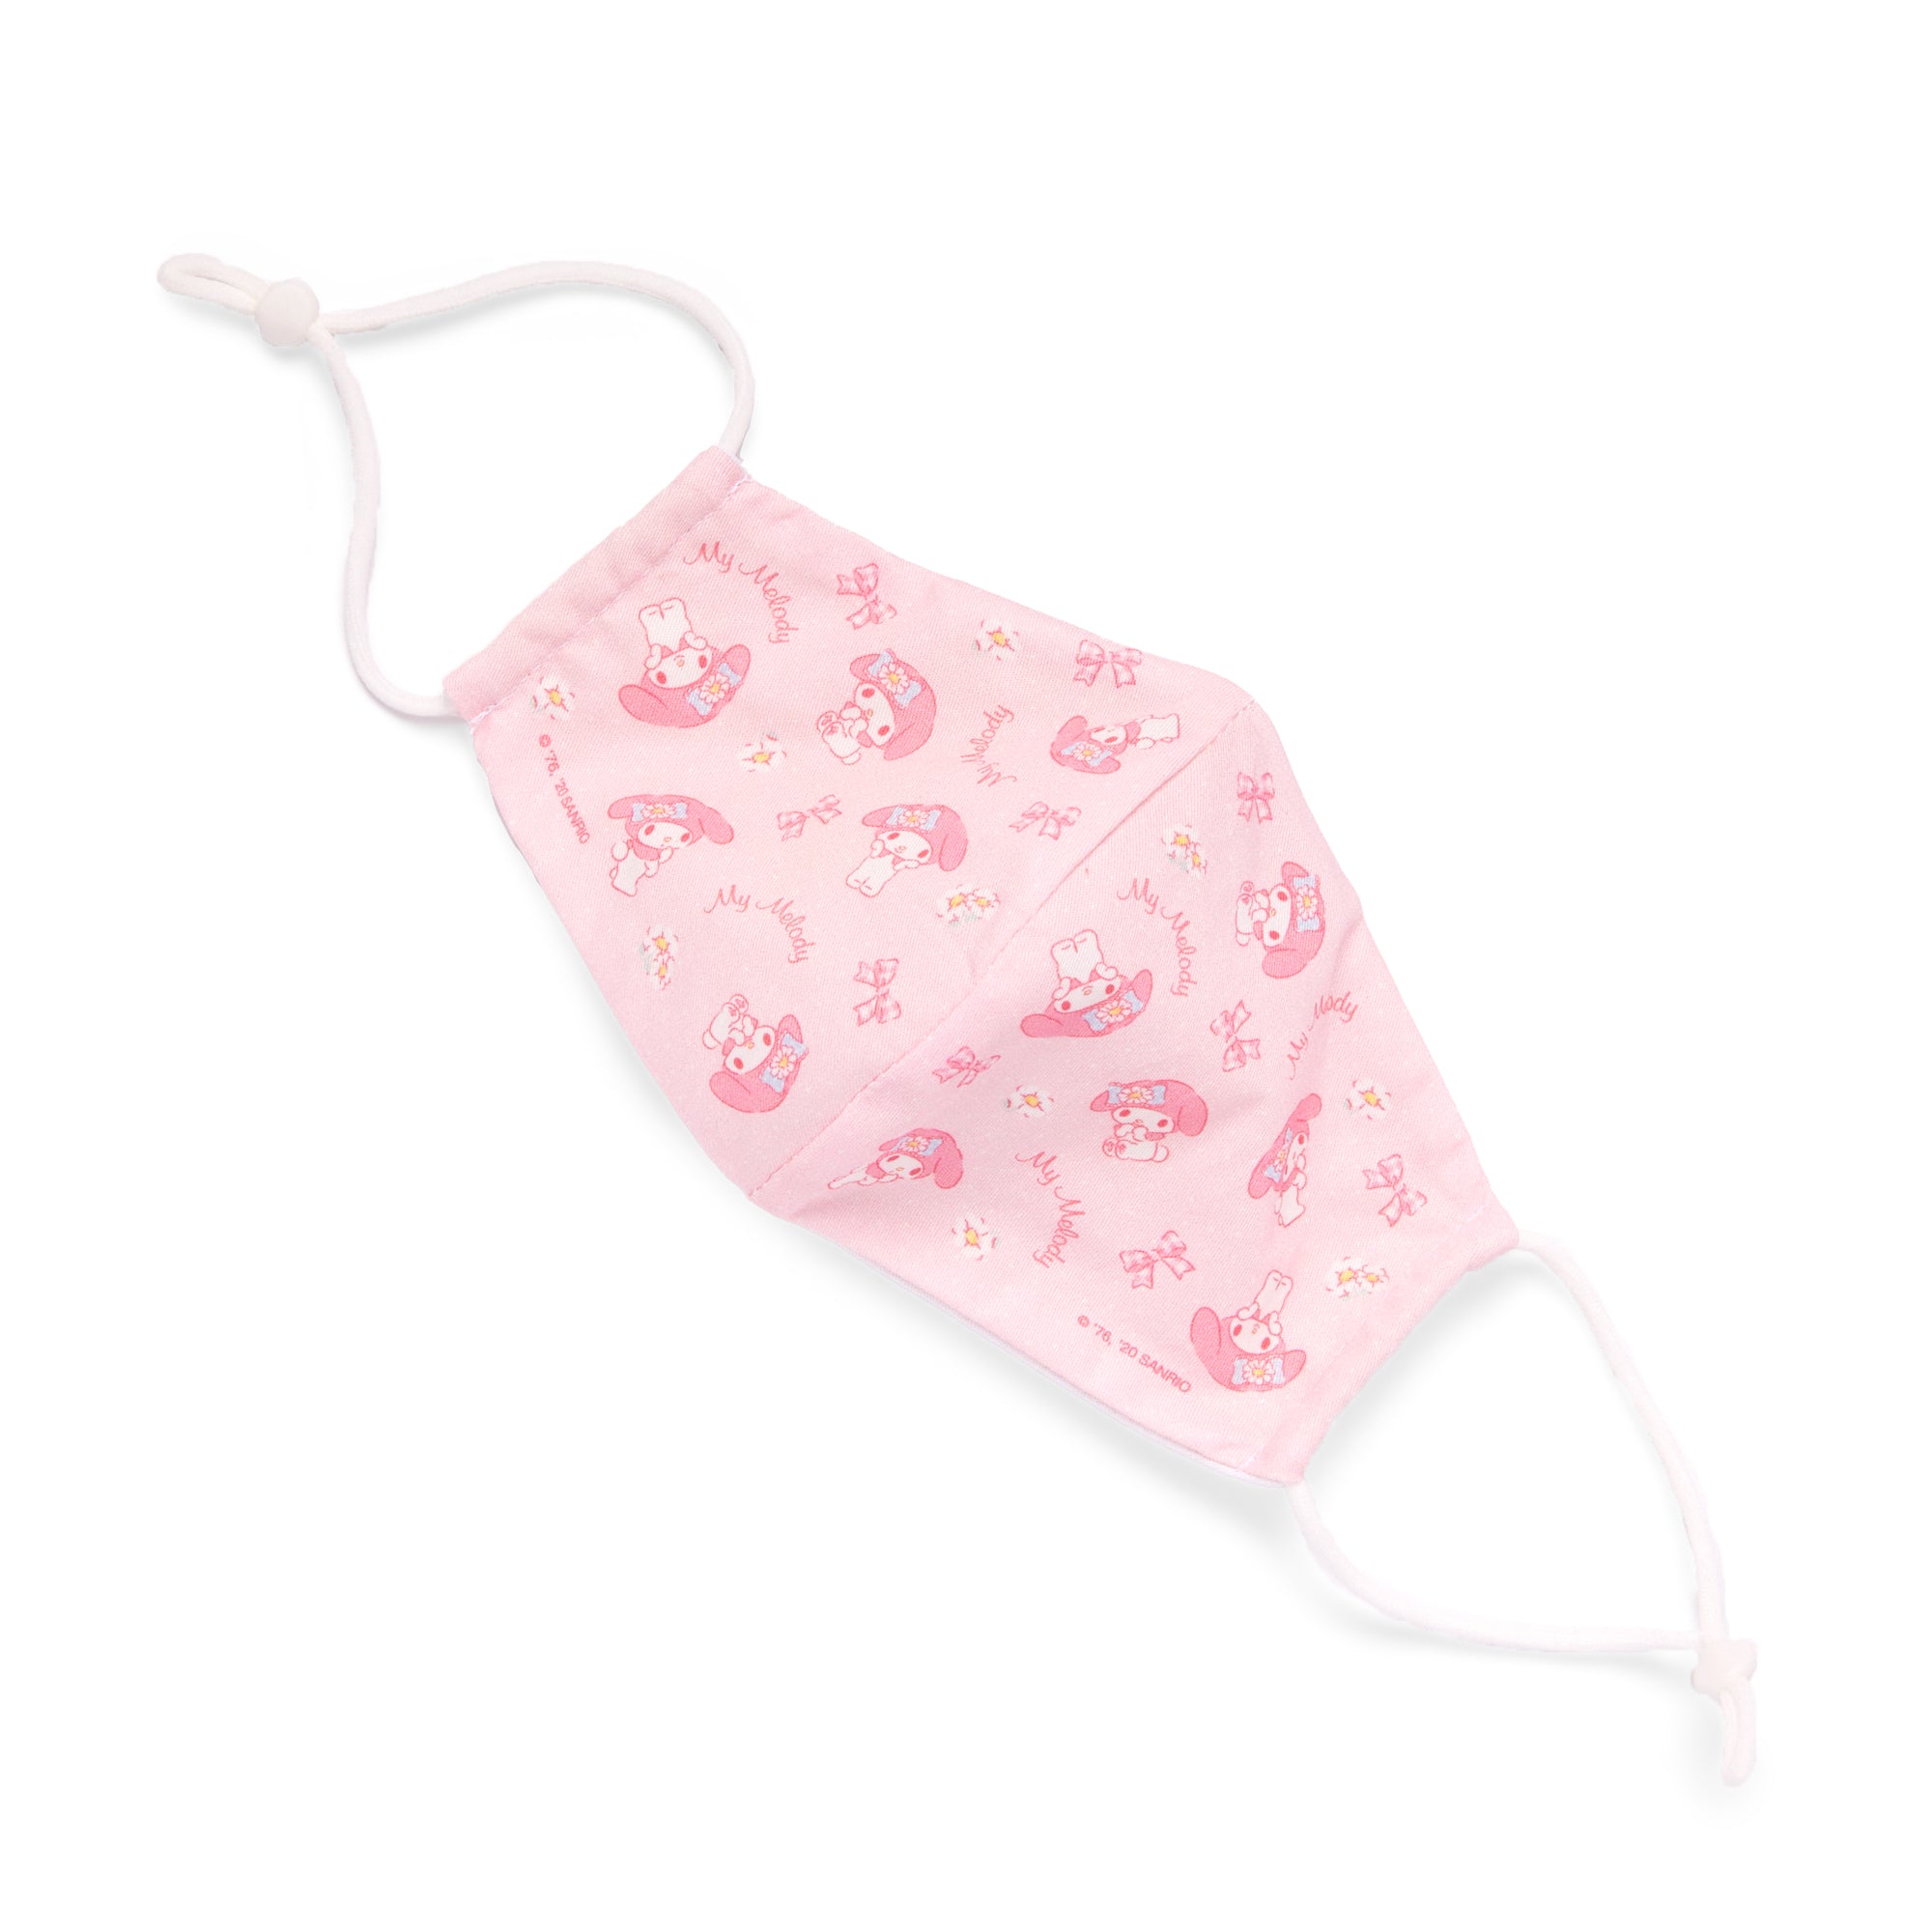 NEW Girls Sz Small 6 6x Underwear Panties 3 Pack Hello Kitty ￼Boy Leg Sanrio